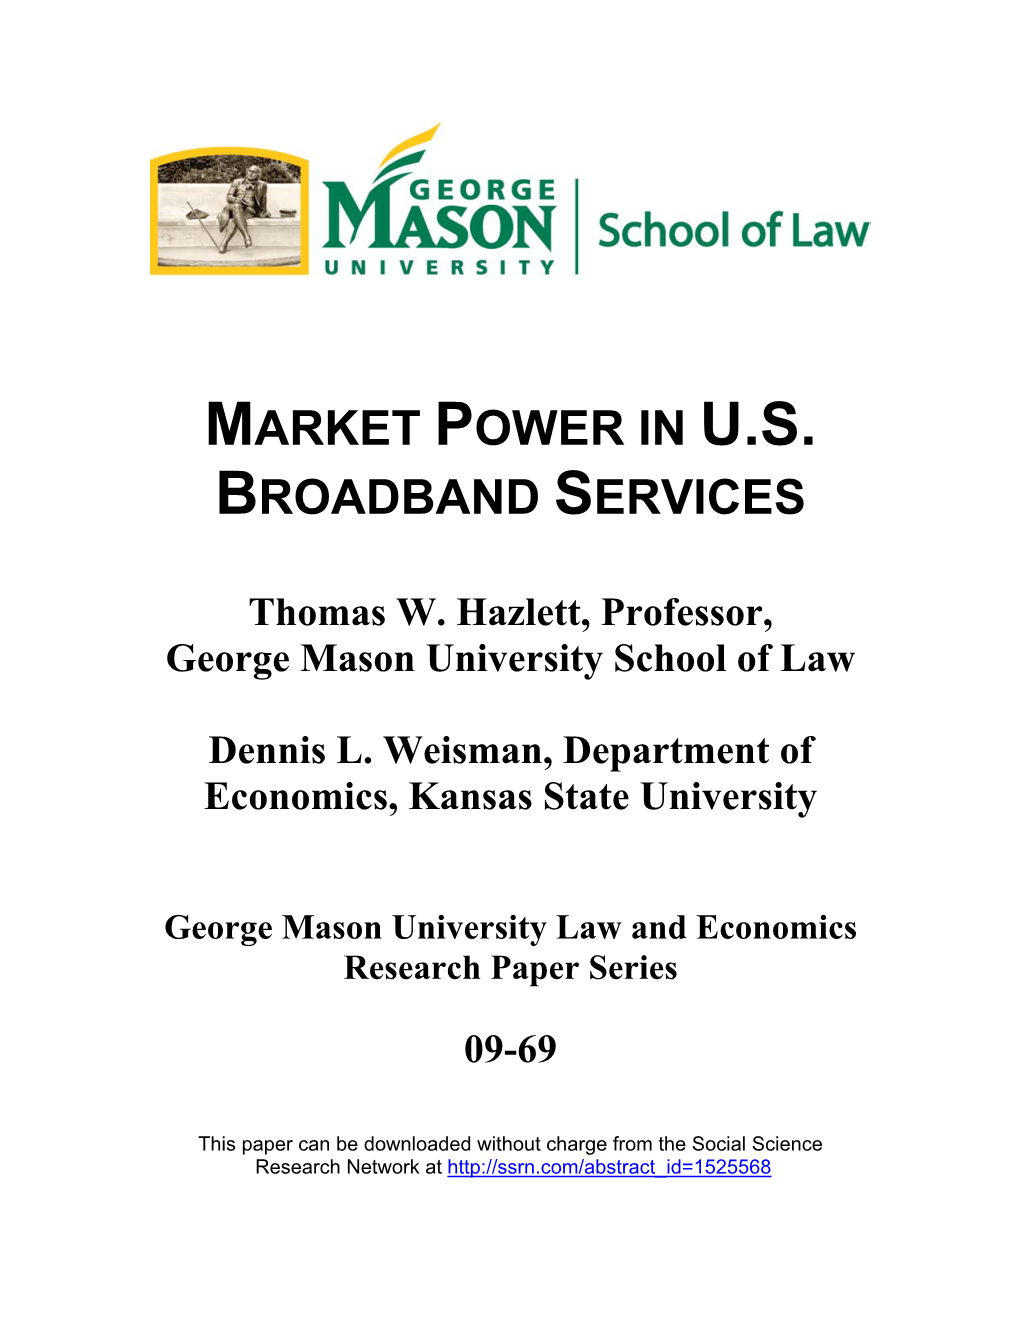 Market Power in U.S. Broadband Services